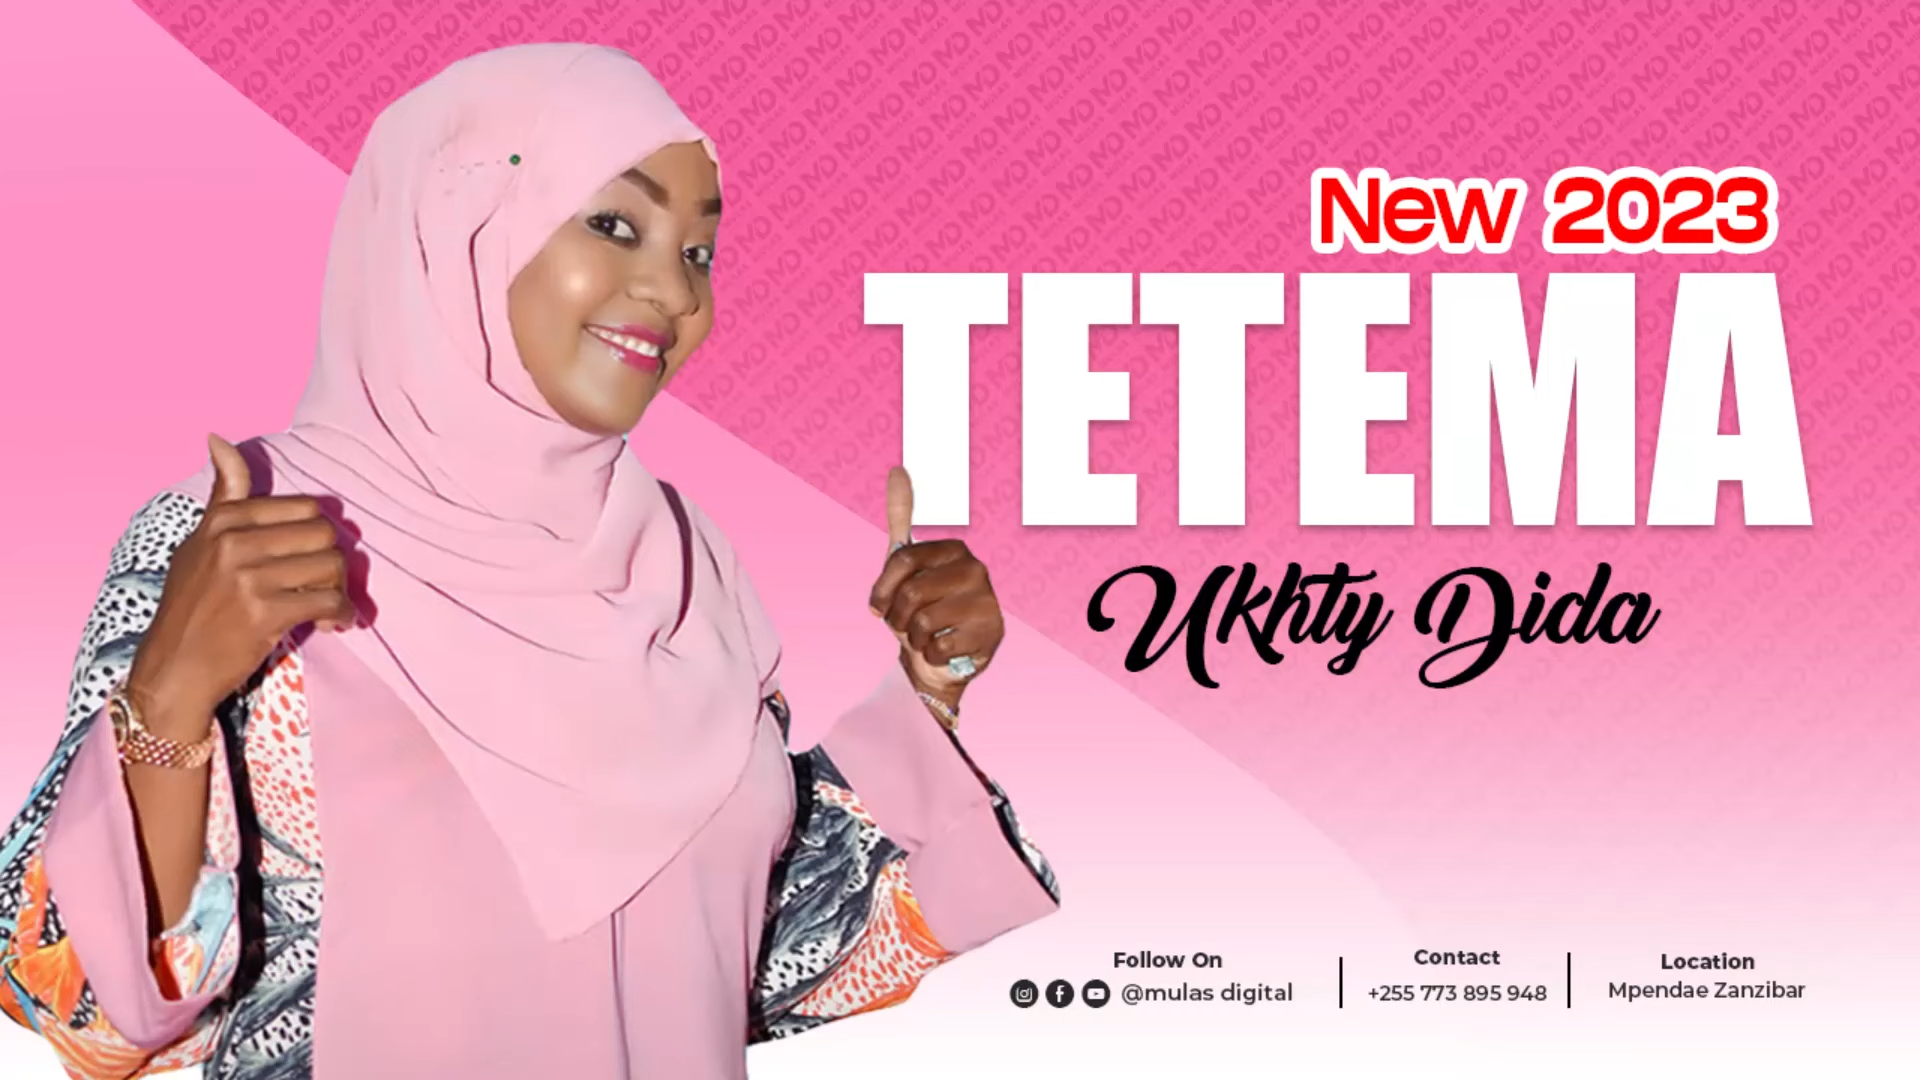 UKHTY DIDA - Tetema Mp3 Download